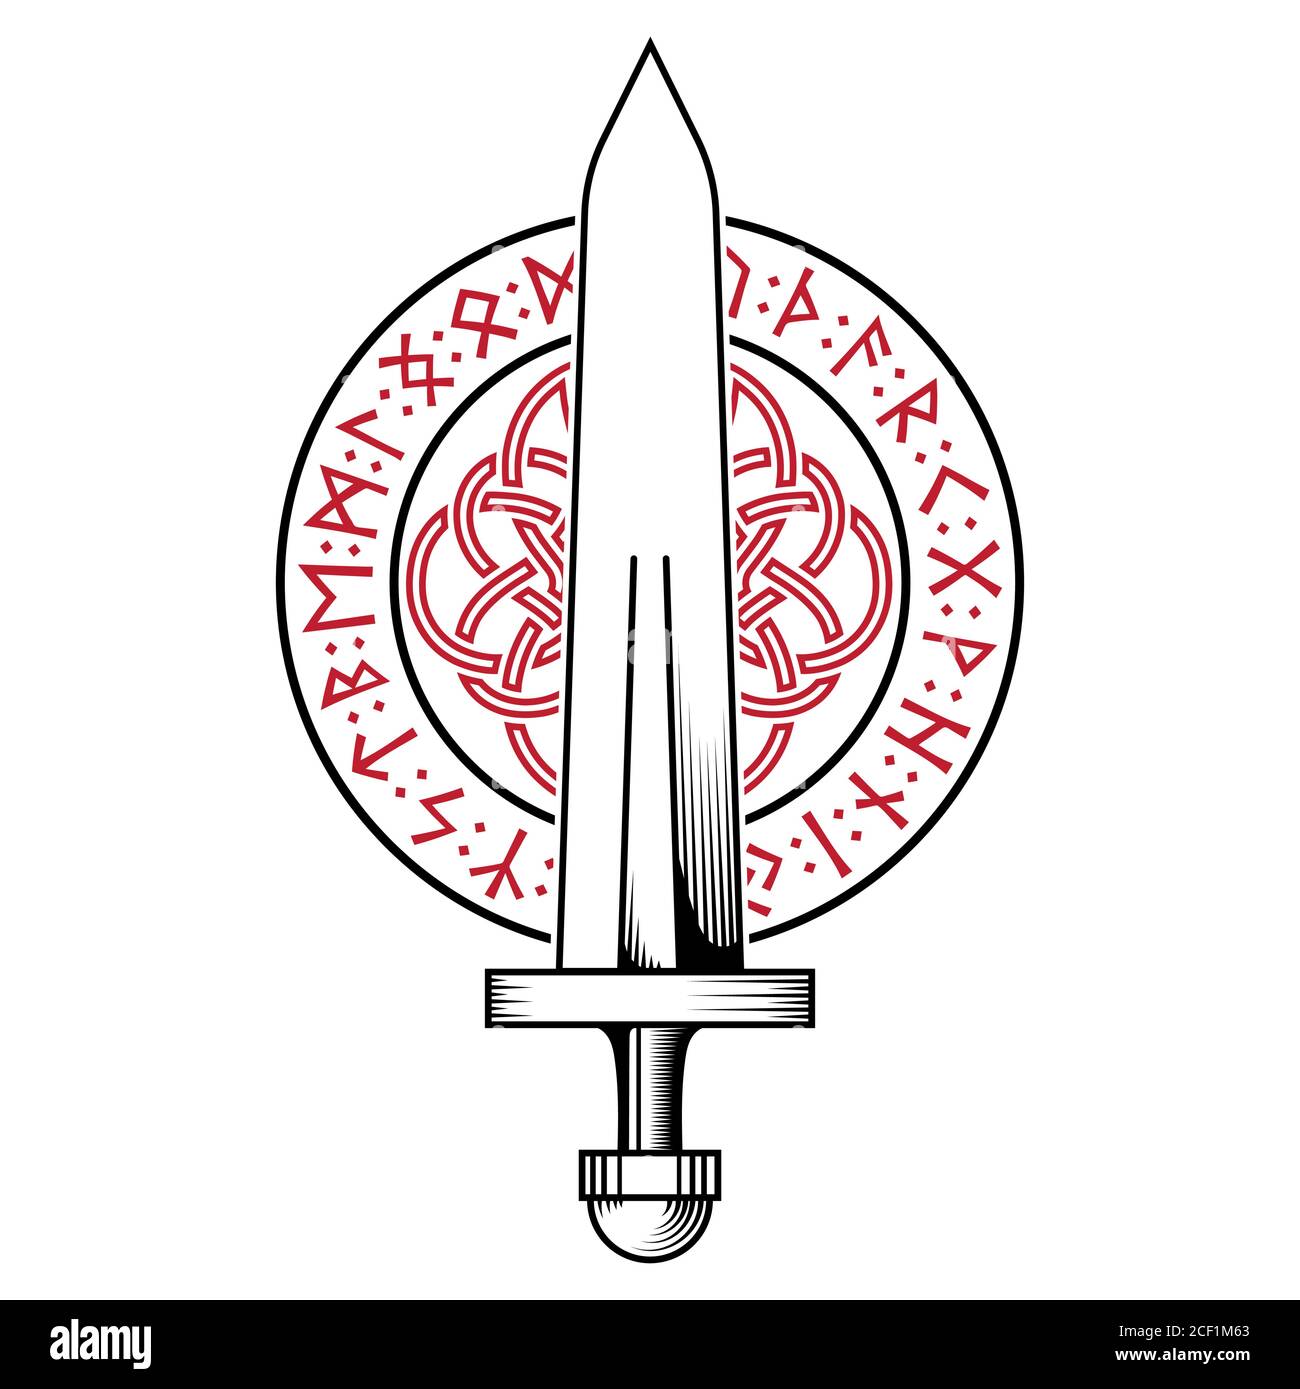 Tattoo sword Imágenes recortadas de stock - Página 2 - Alamy